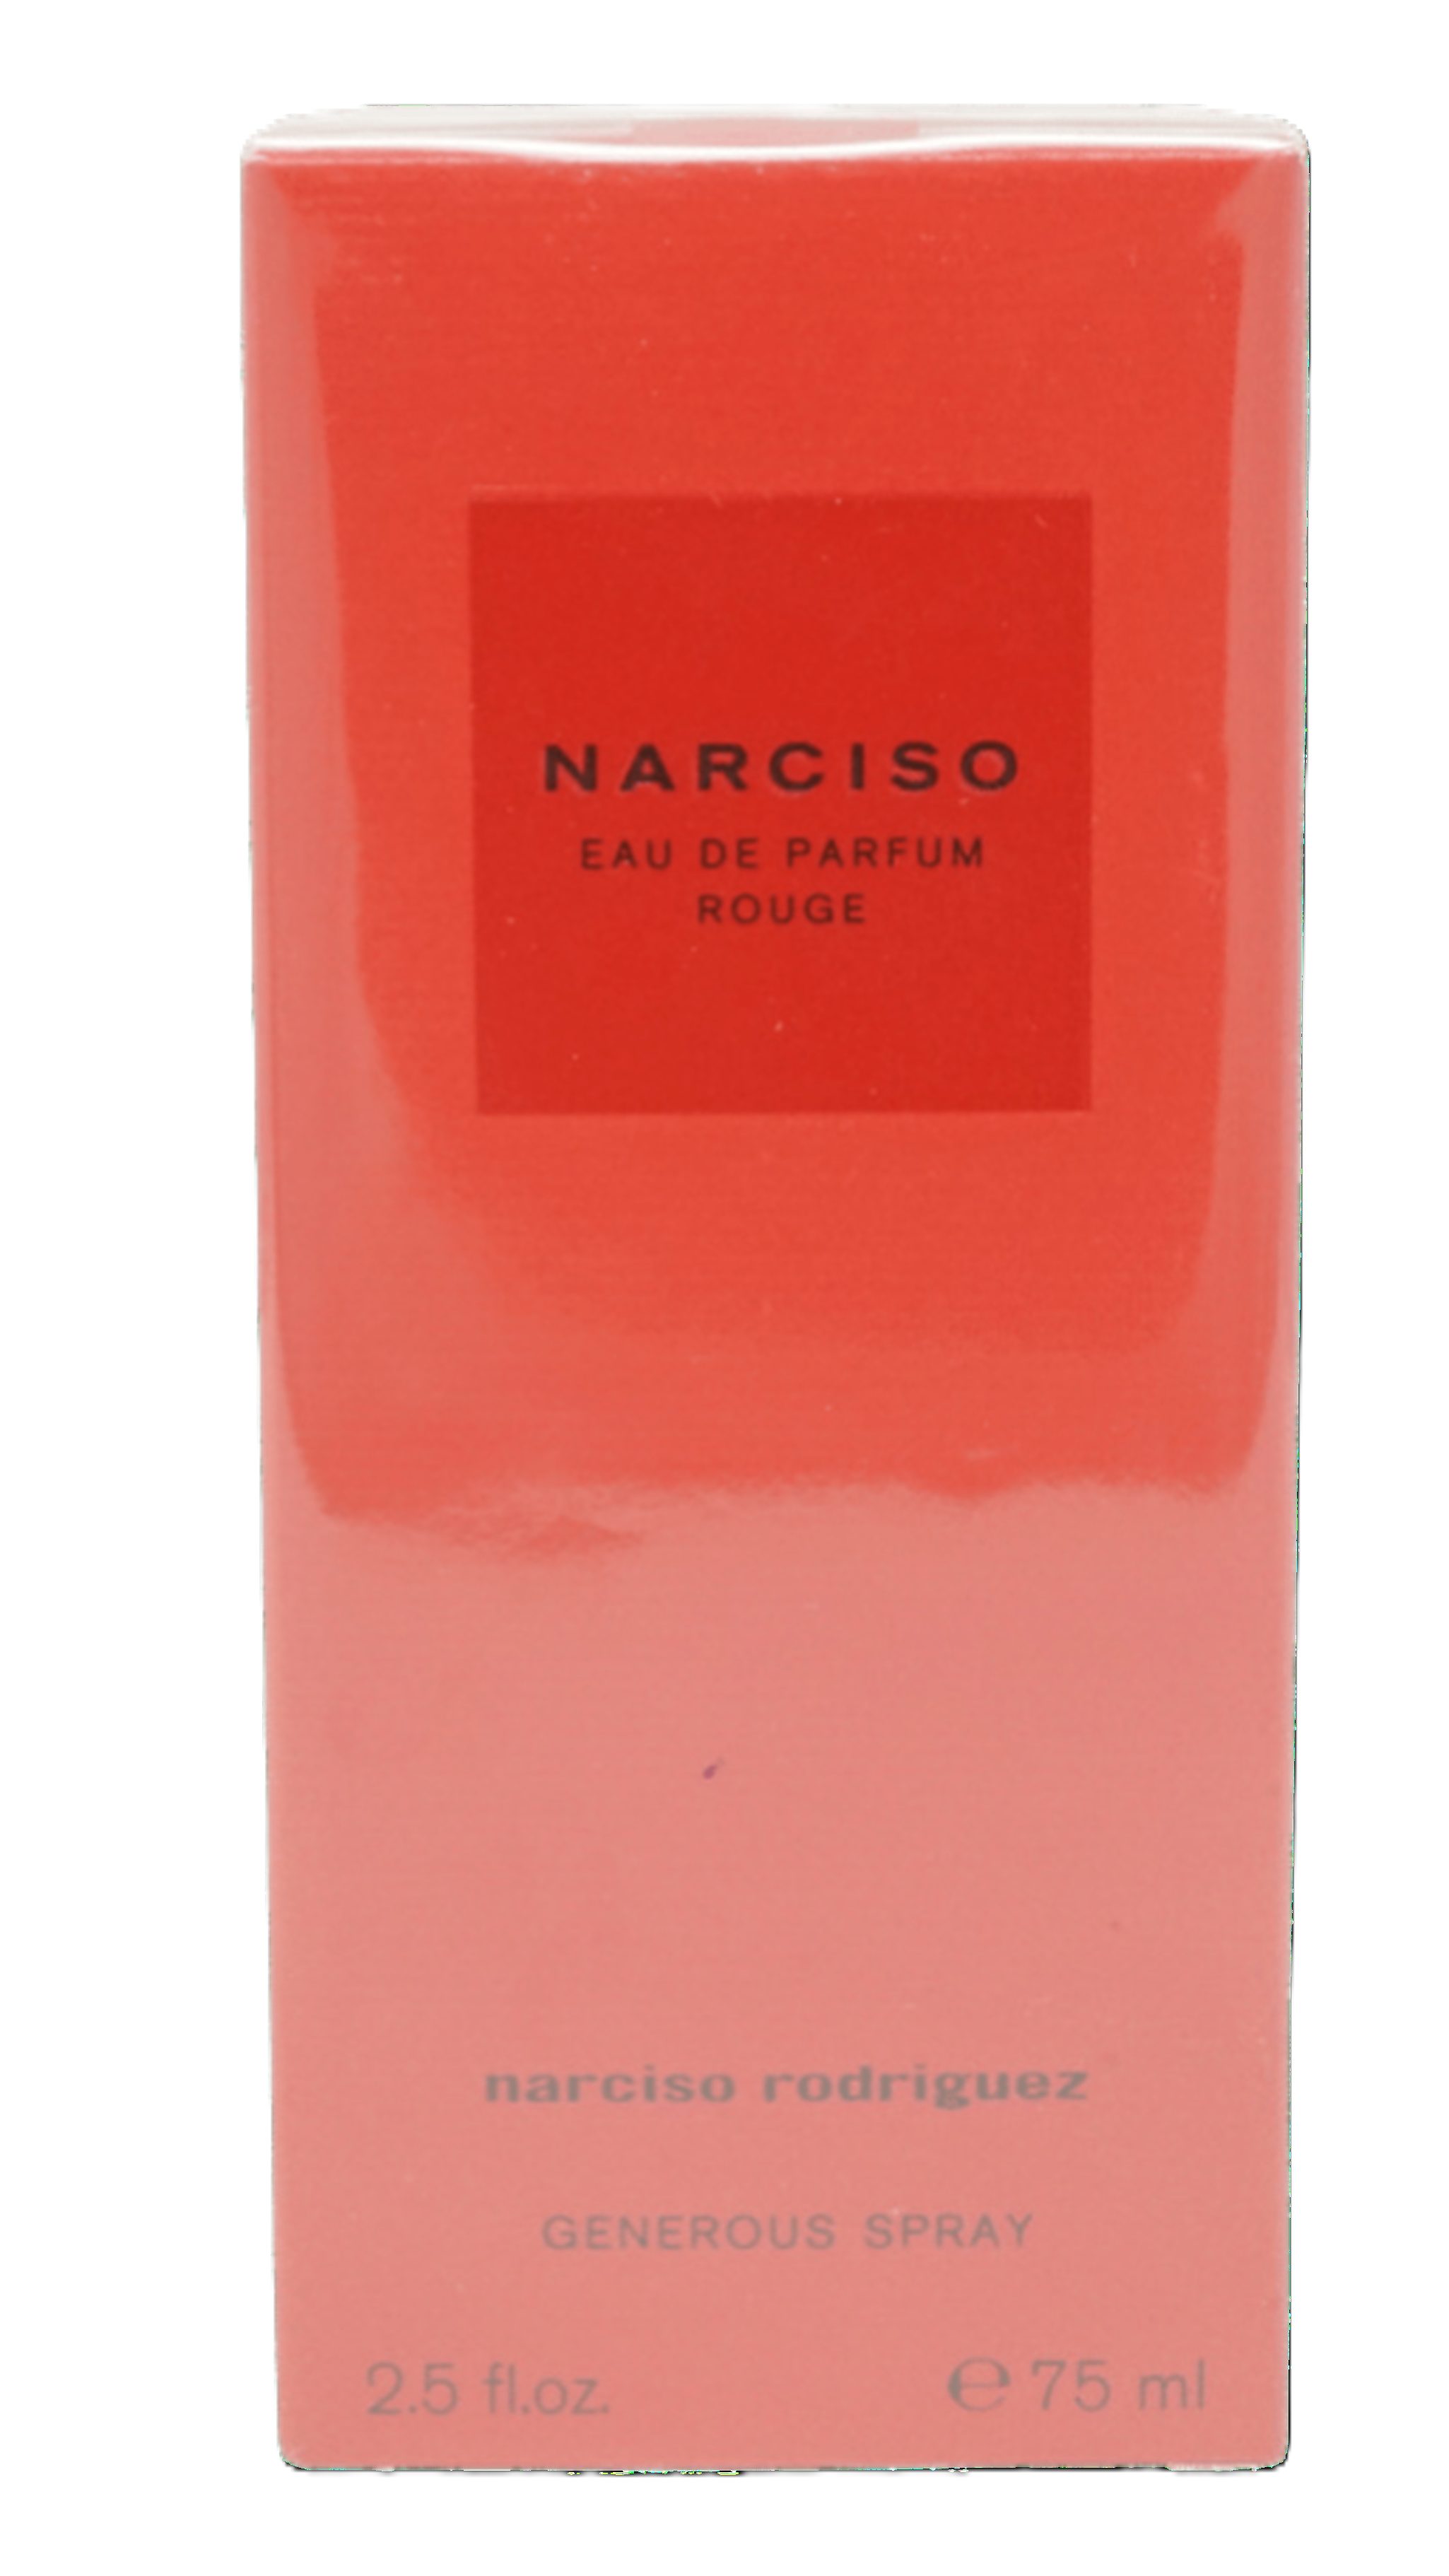 narciso rodriguez Eau de Parfum Narciso Rodriguez Narciso Eau de Parfum Rouge Generous Spray 75 ml